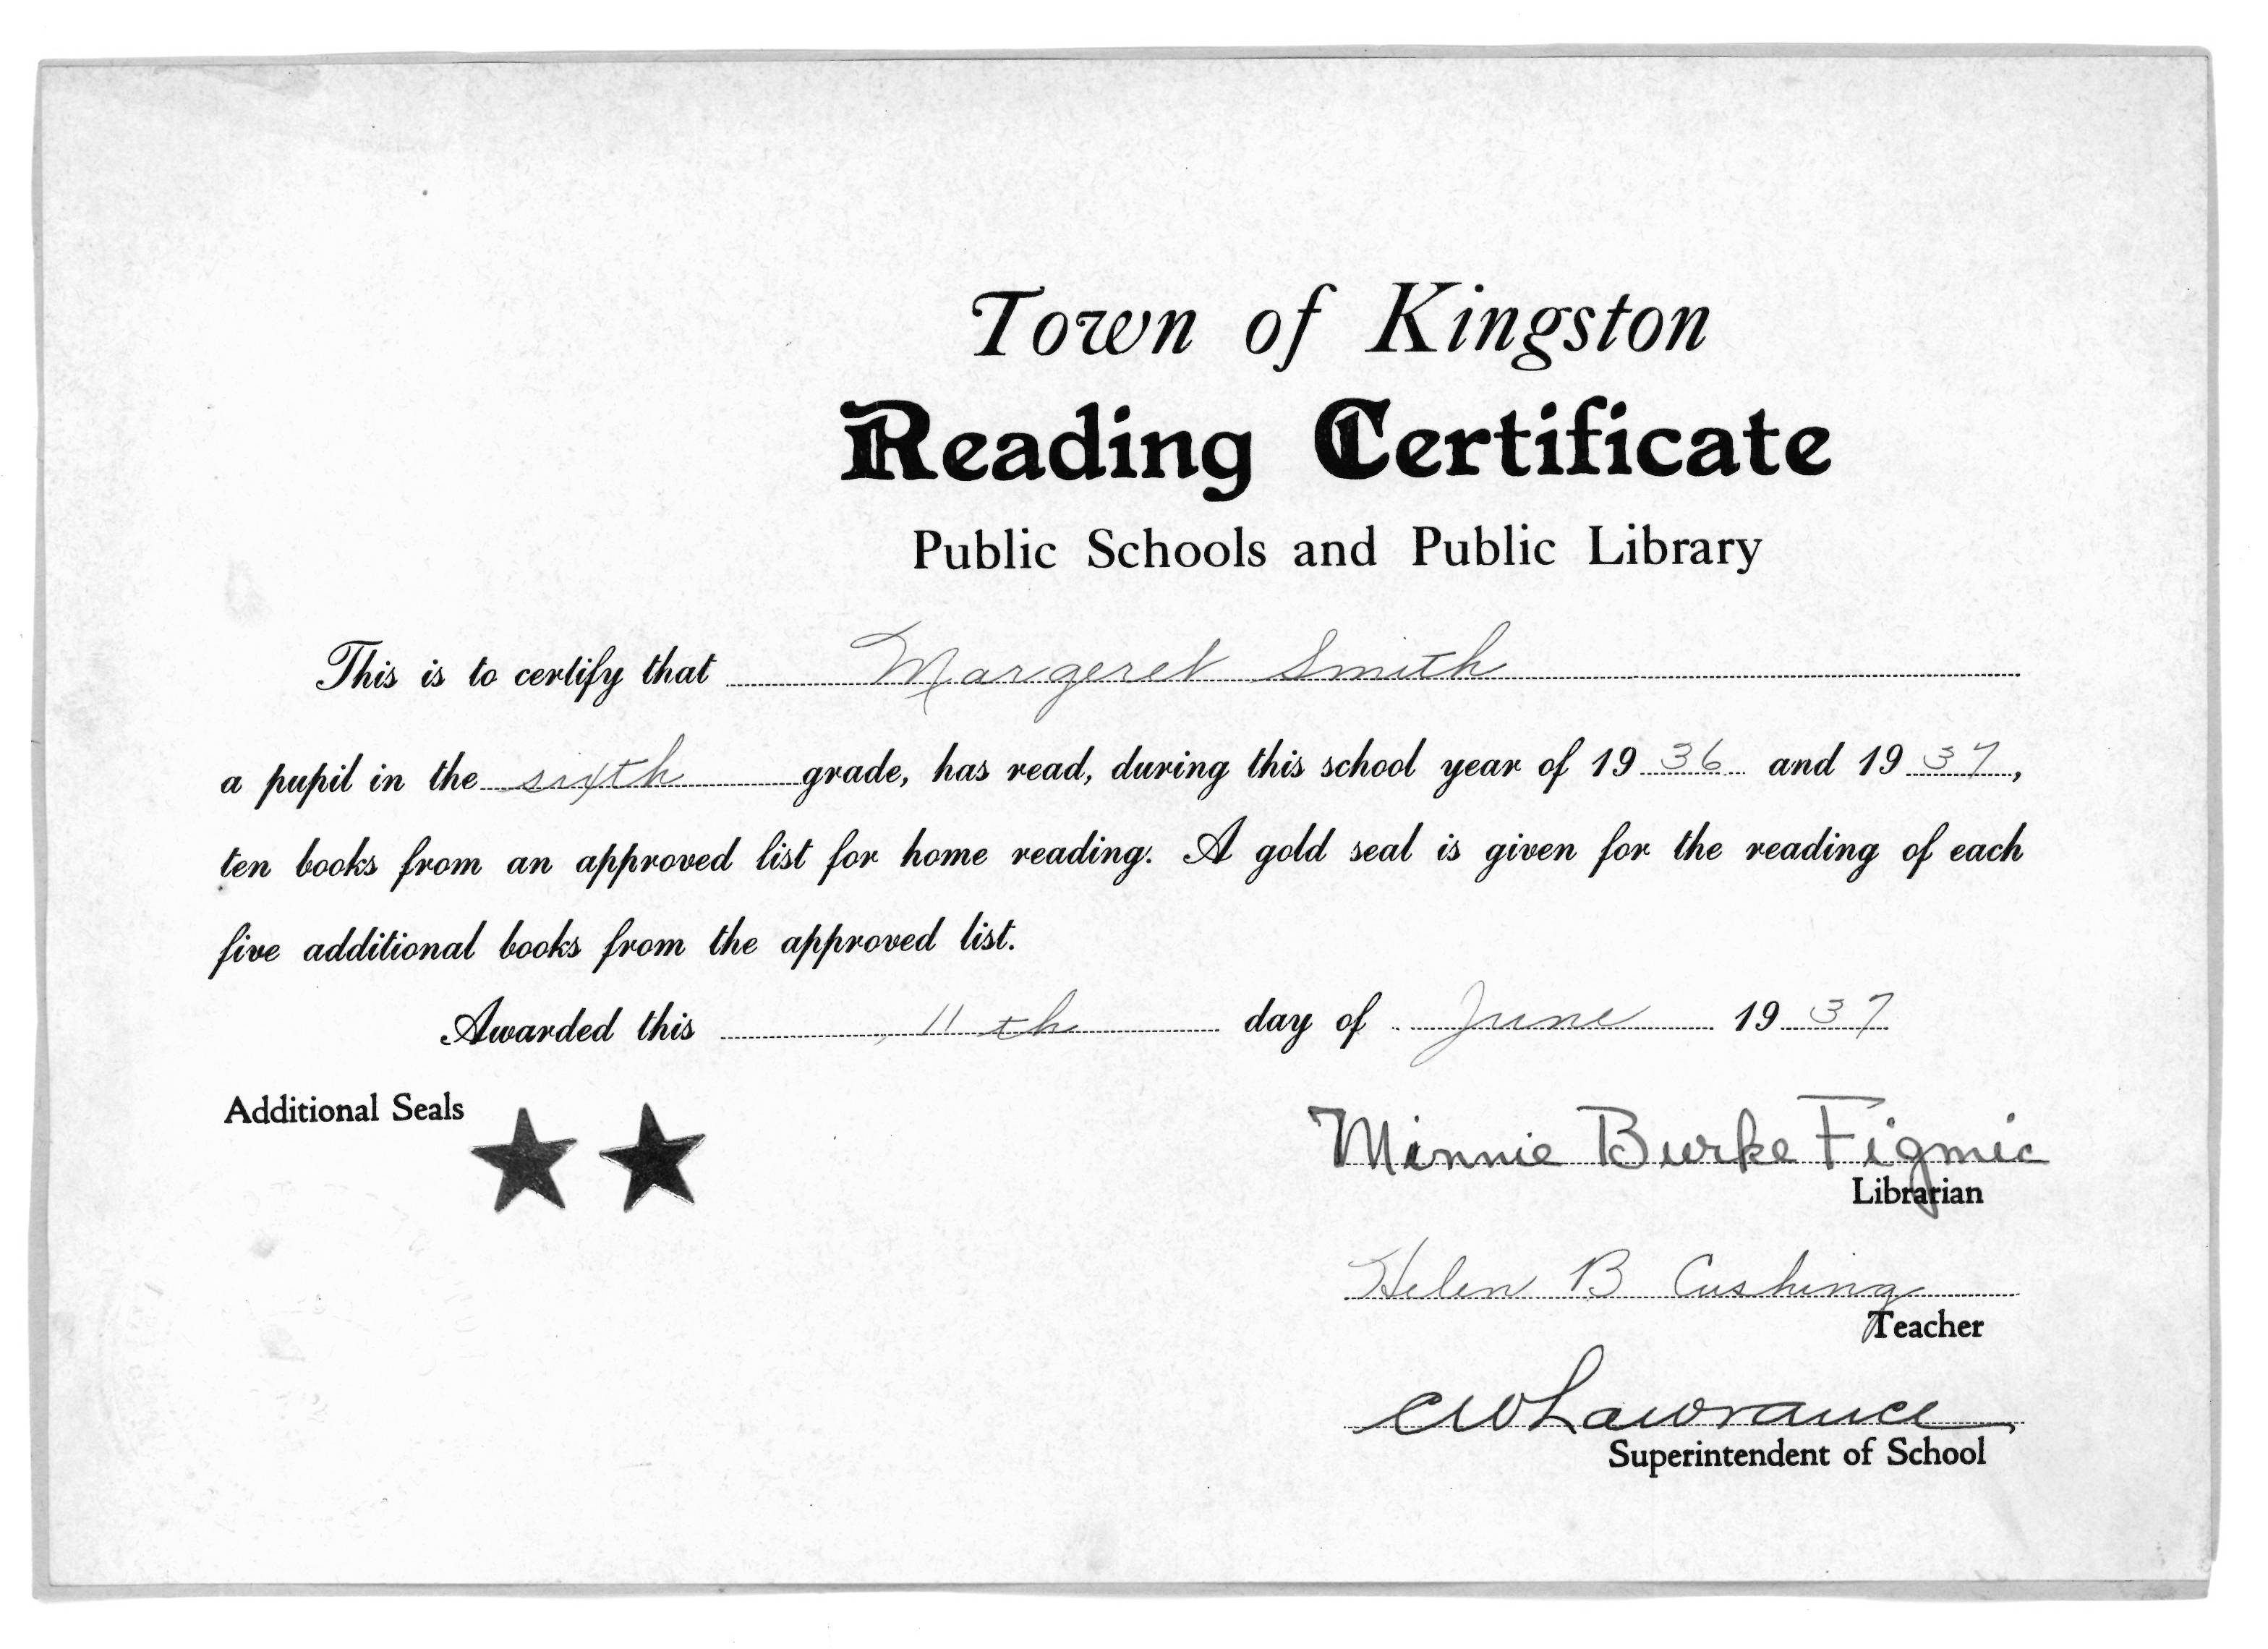 Town of Kingston Reading Certificate, 1937